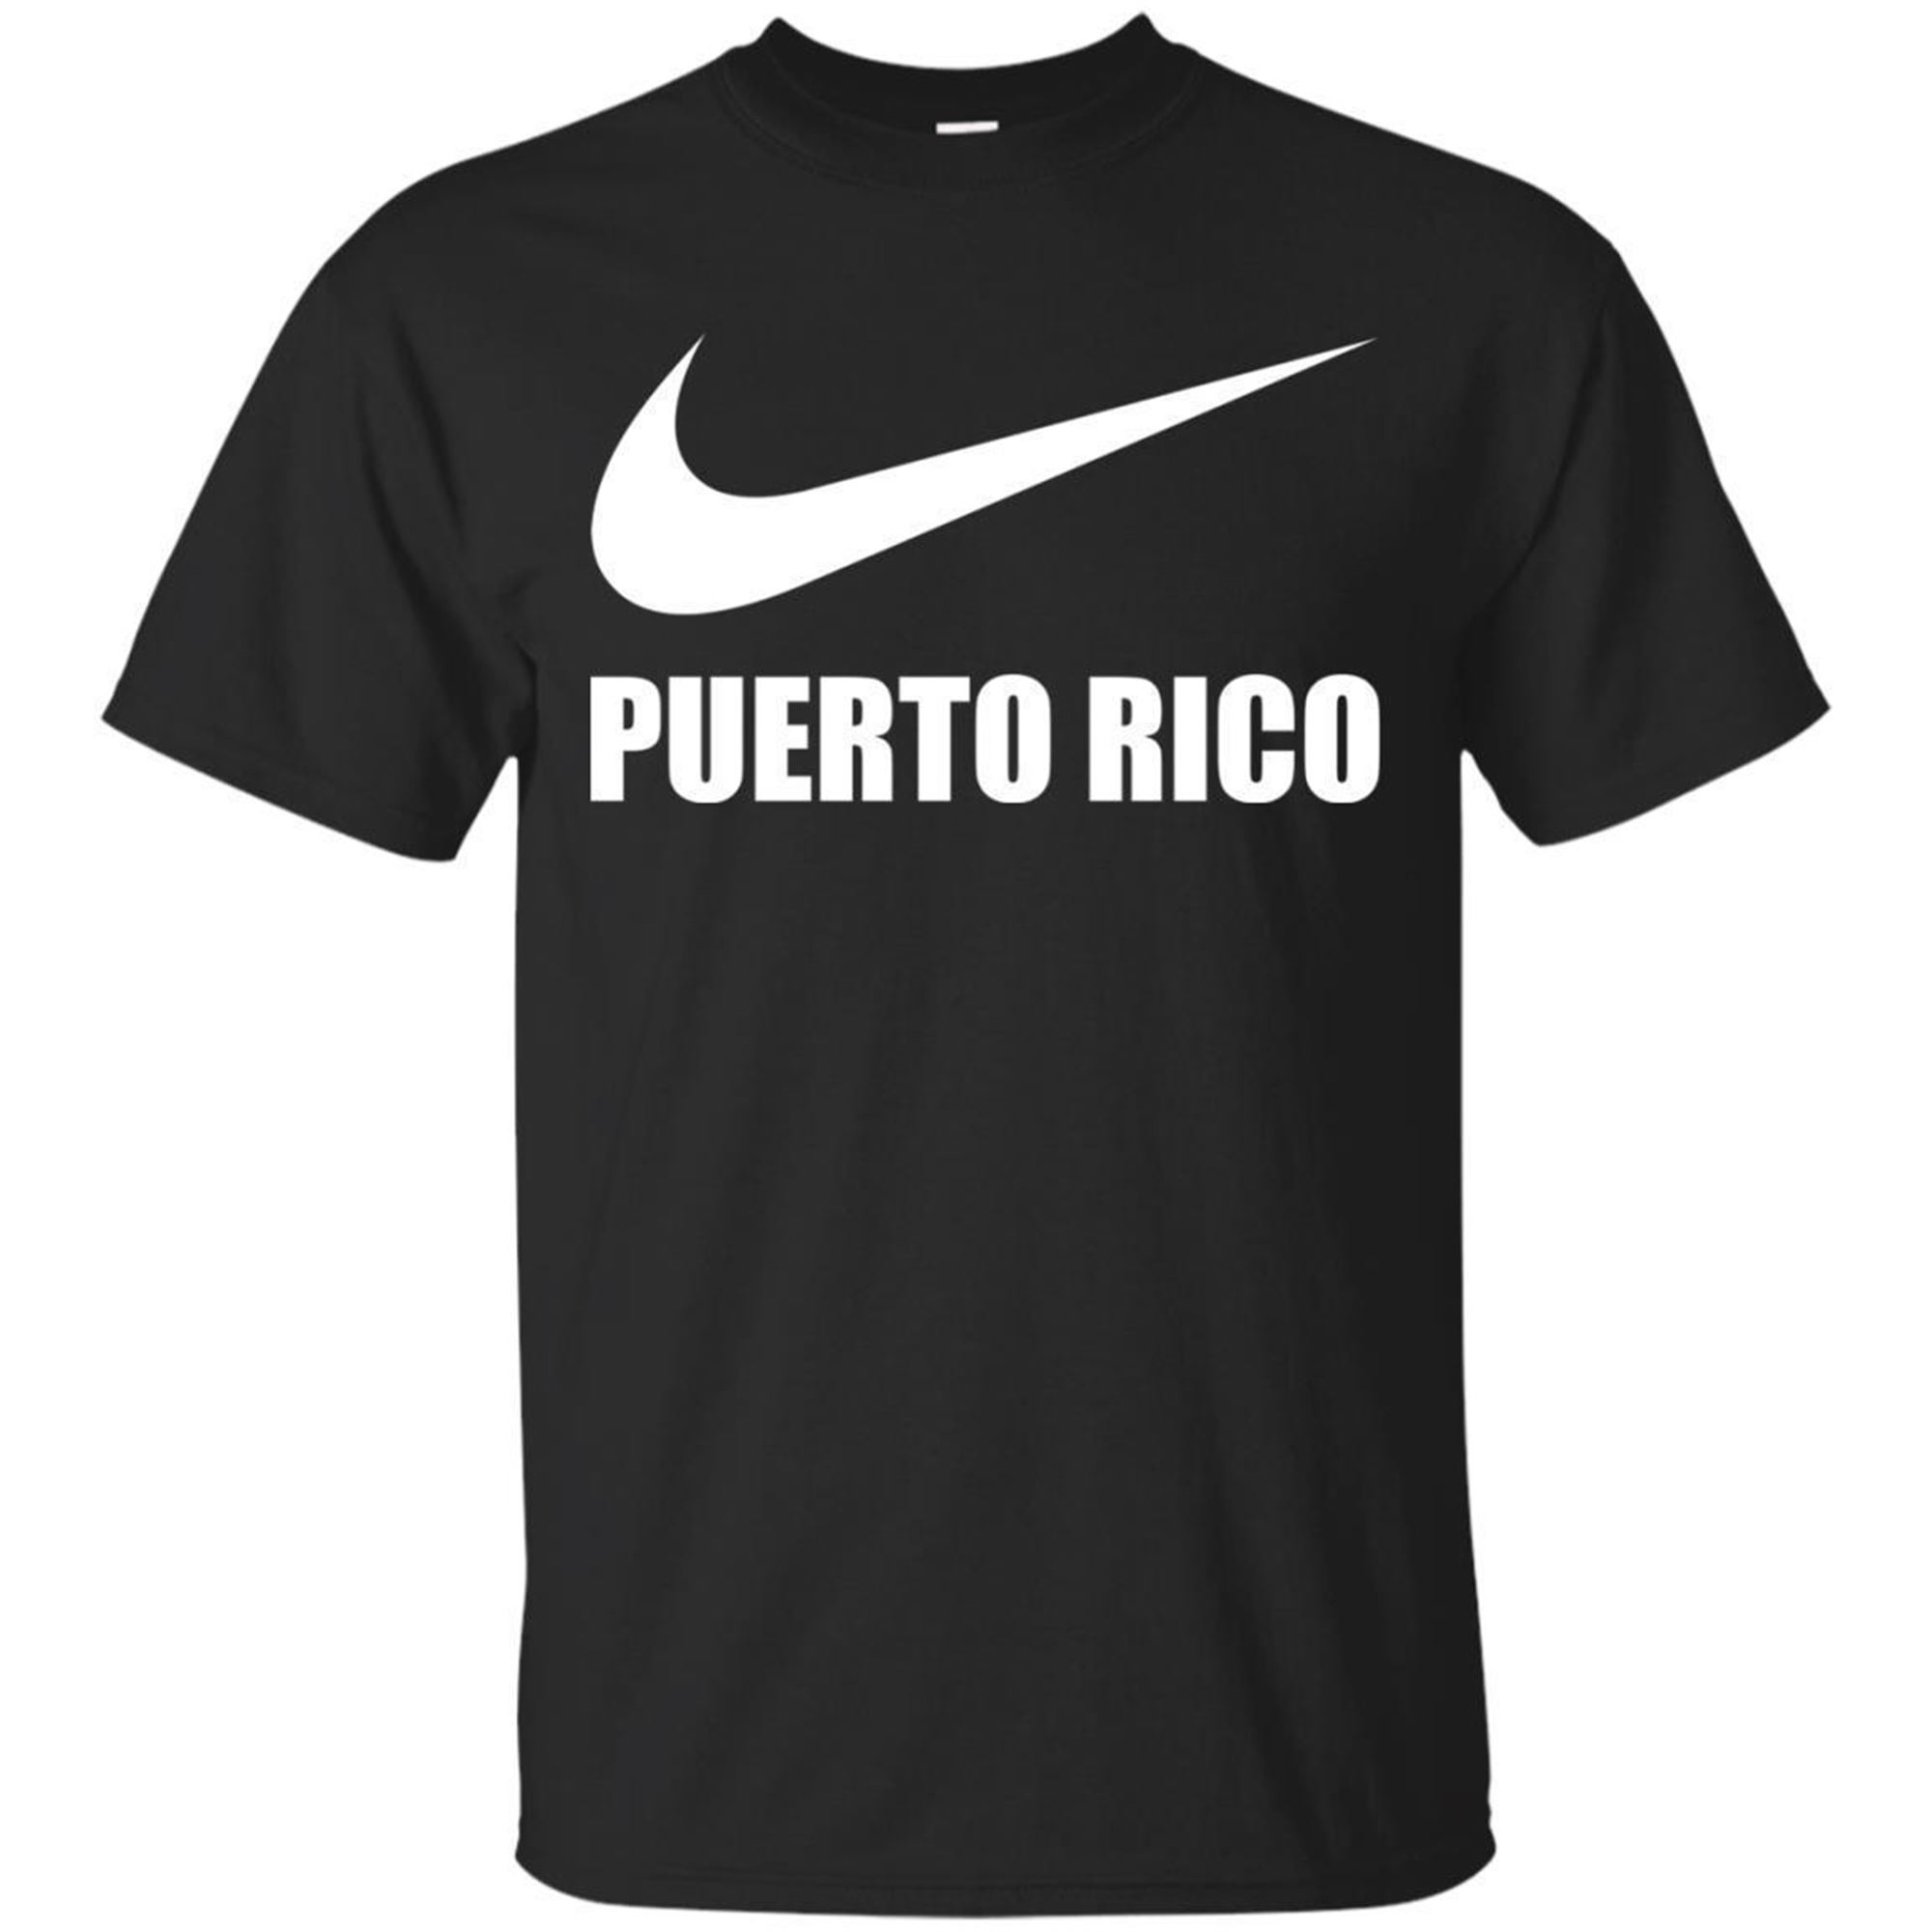 Puerto Rico Nike Shirt